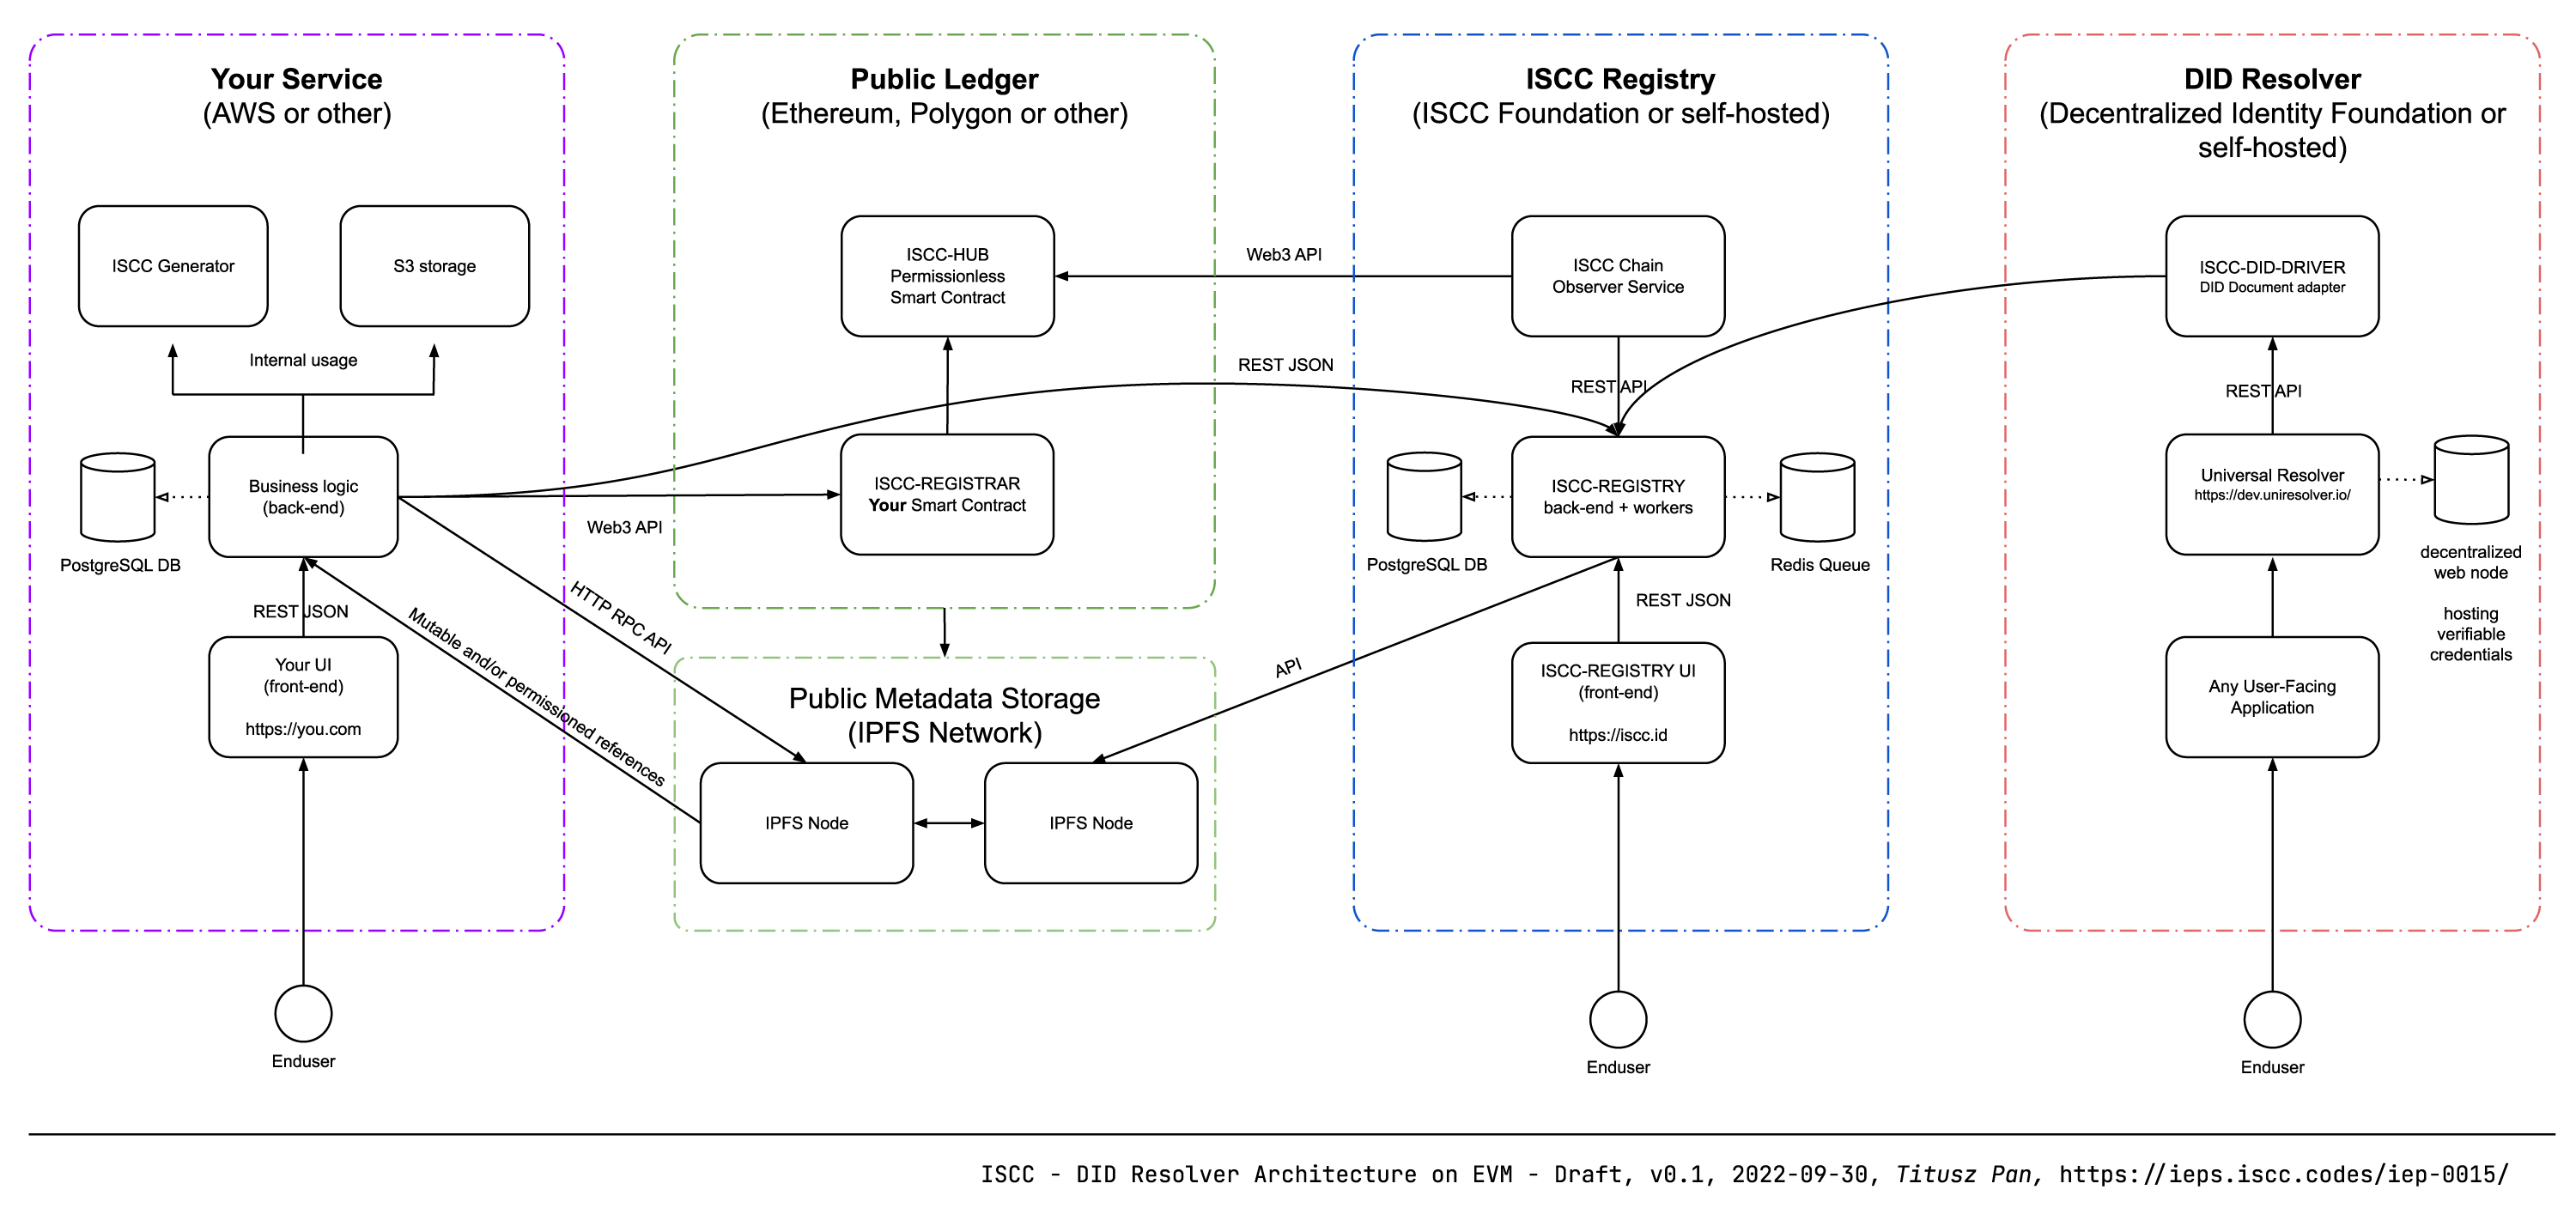 Figure 2 - ISCC DID Architecture